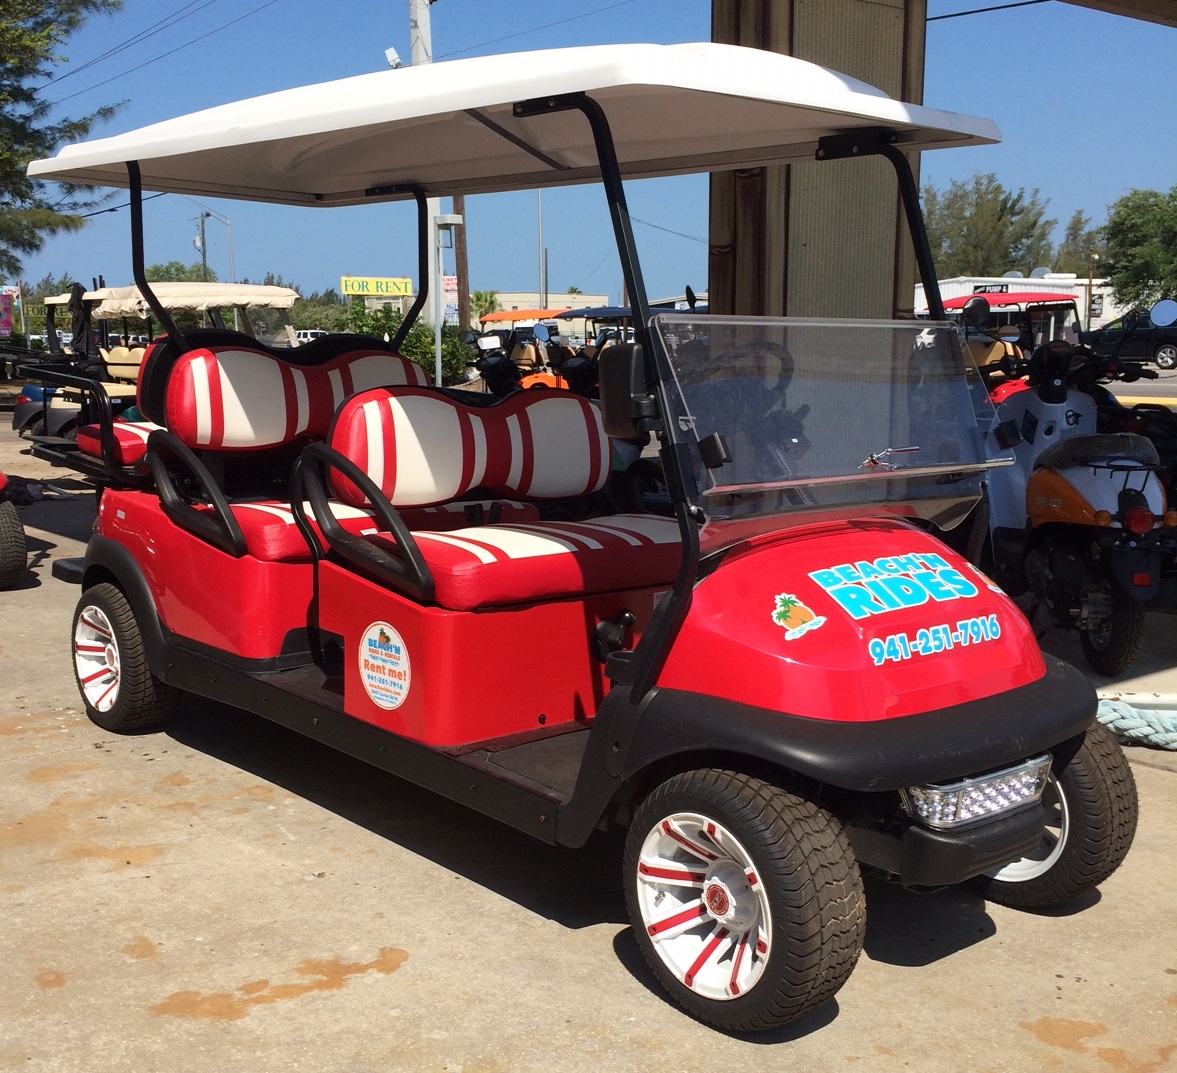 6 Passenger Street Legal Golf Cart Rental, Electric Beach 'N Rides